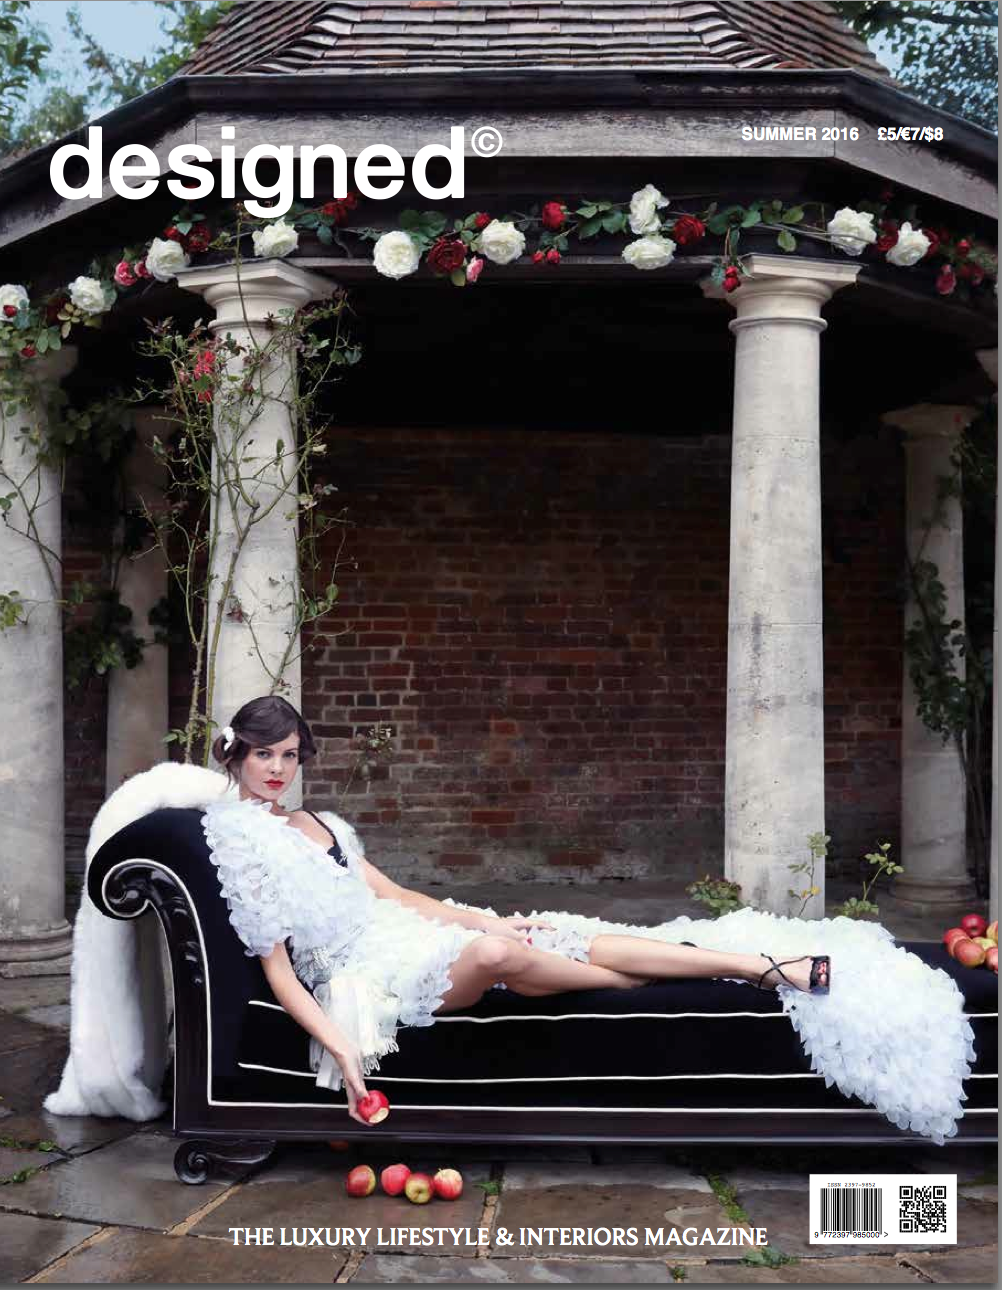 Designed magazine cover